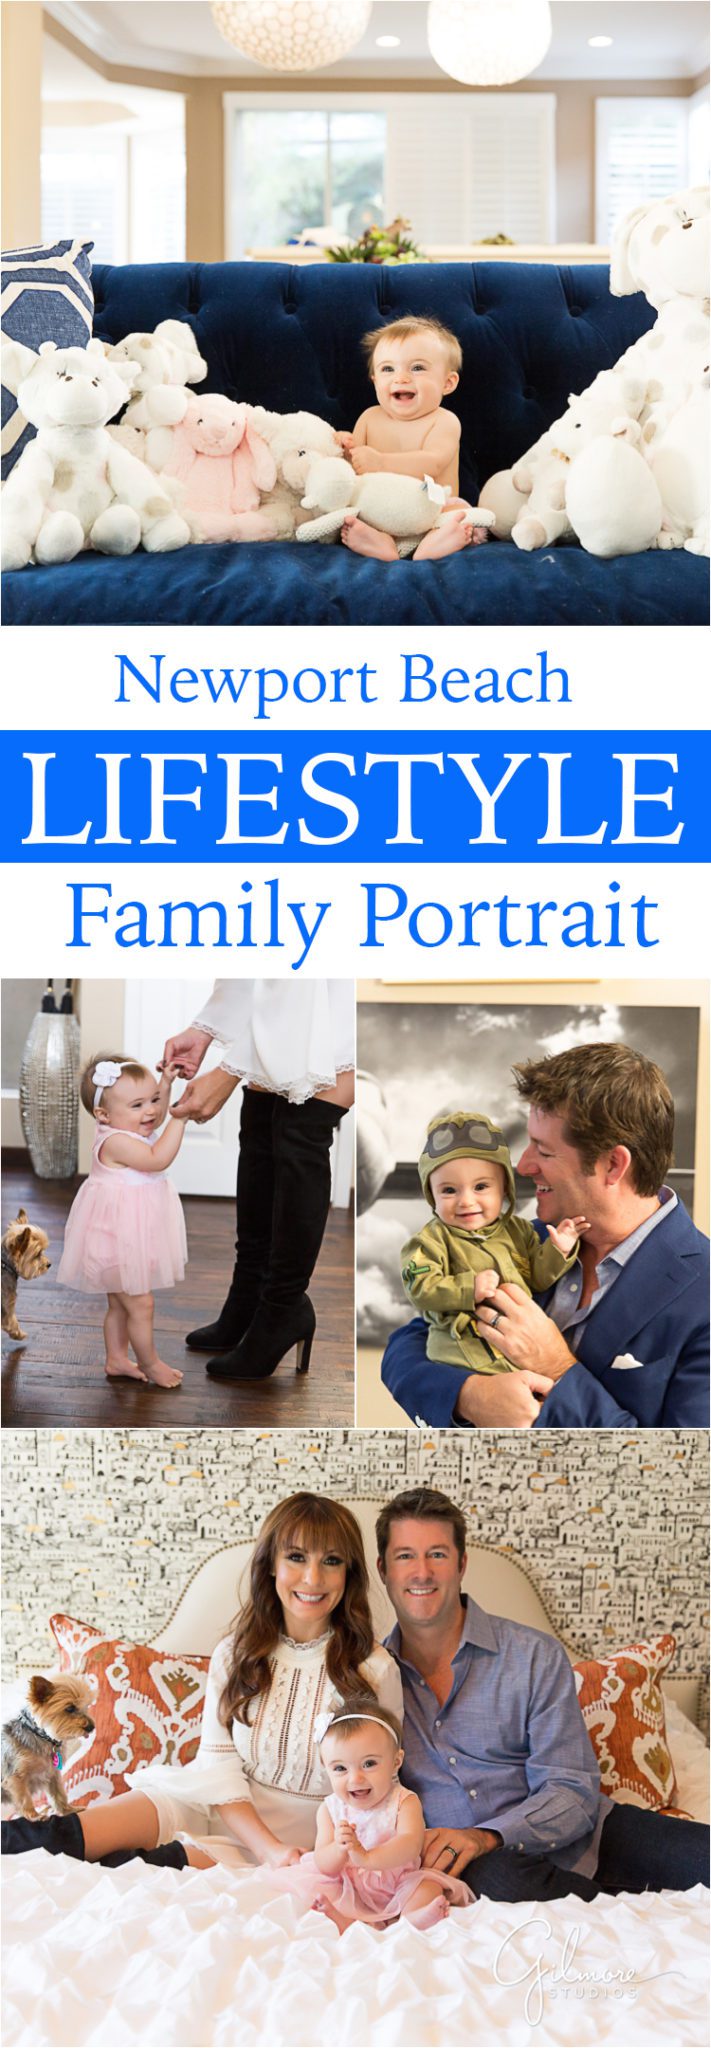 Lifestyle family photography Newport Beach